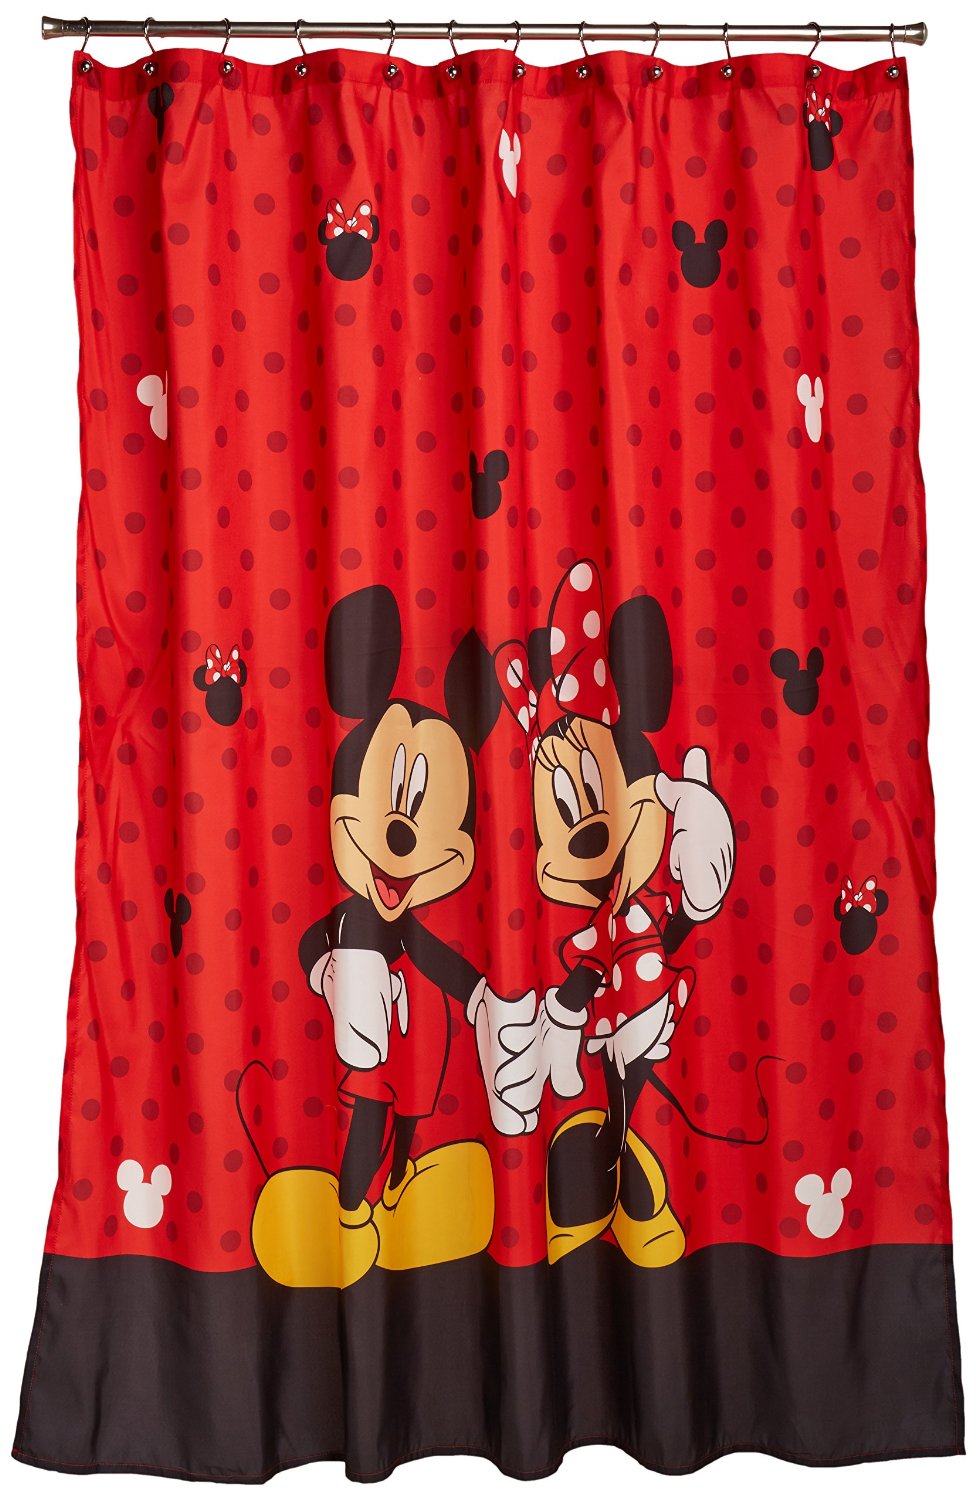 Red Disney Shower Curtain Full of Mickey & Minnie Love